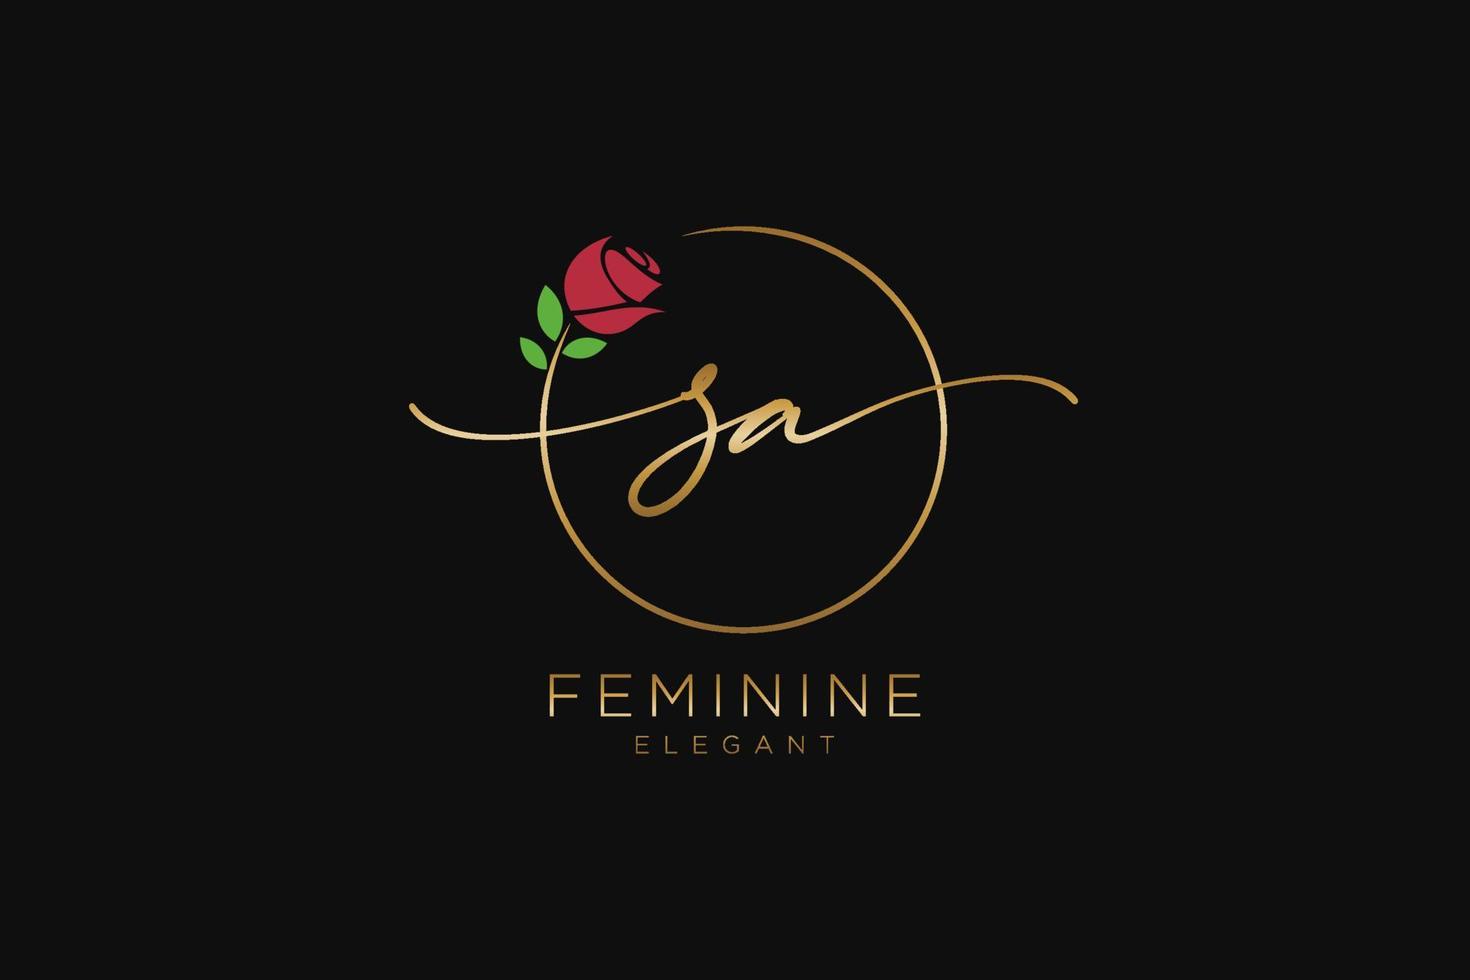 initial SA Feminine logo beauty monogram and elegant logo design, handwriting logo of initial signature, wedding, fashion, floral and botanical with creative template. vector